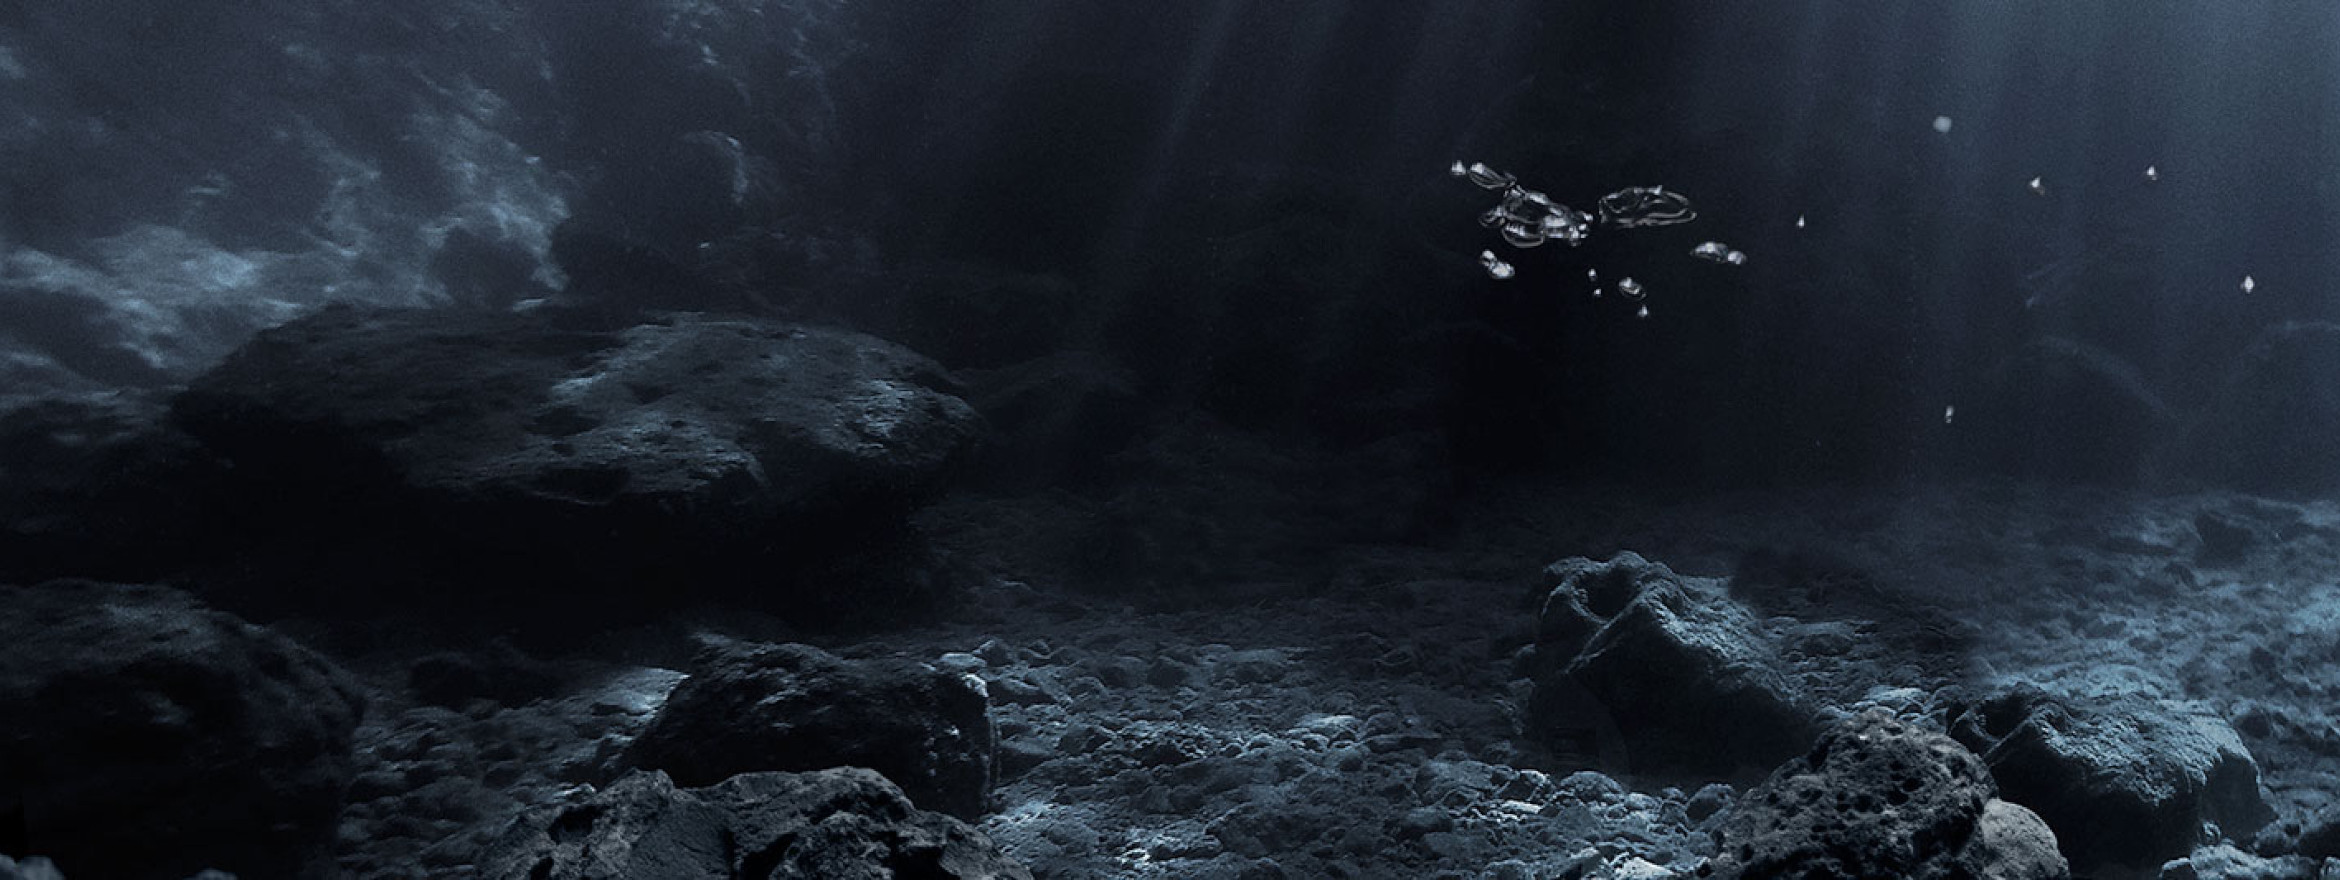 Diving In – New Panerai Submersible Models